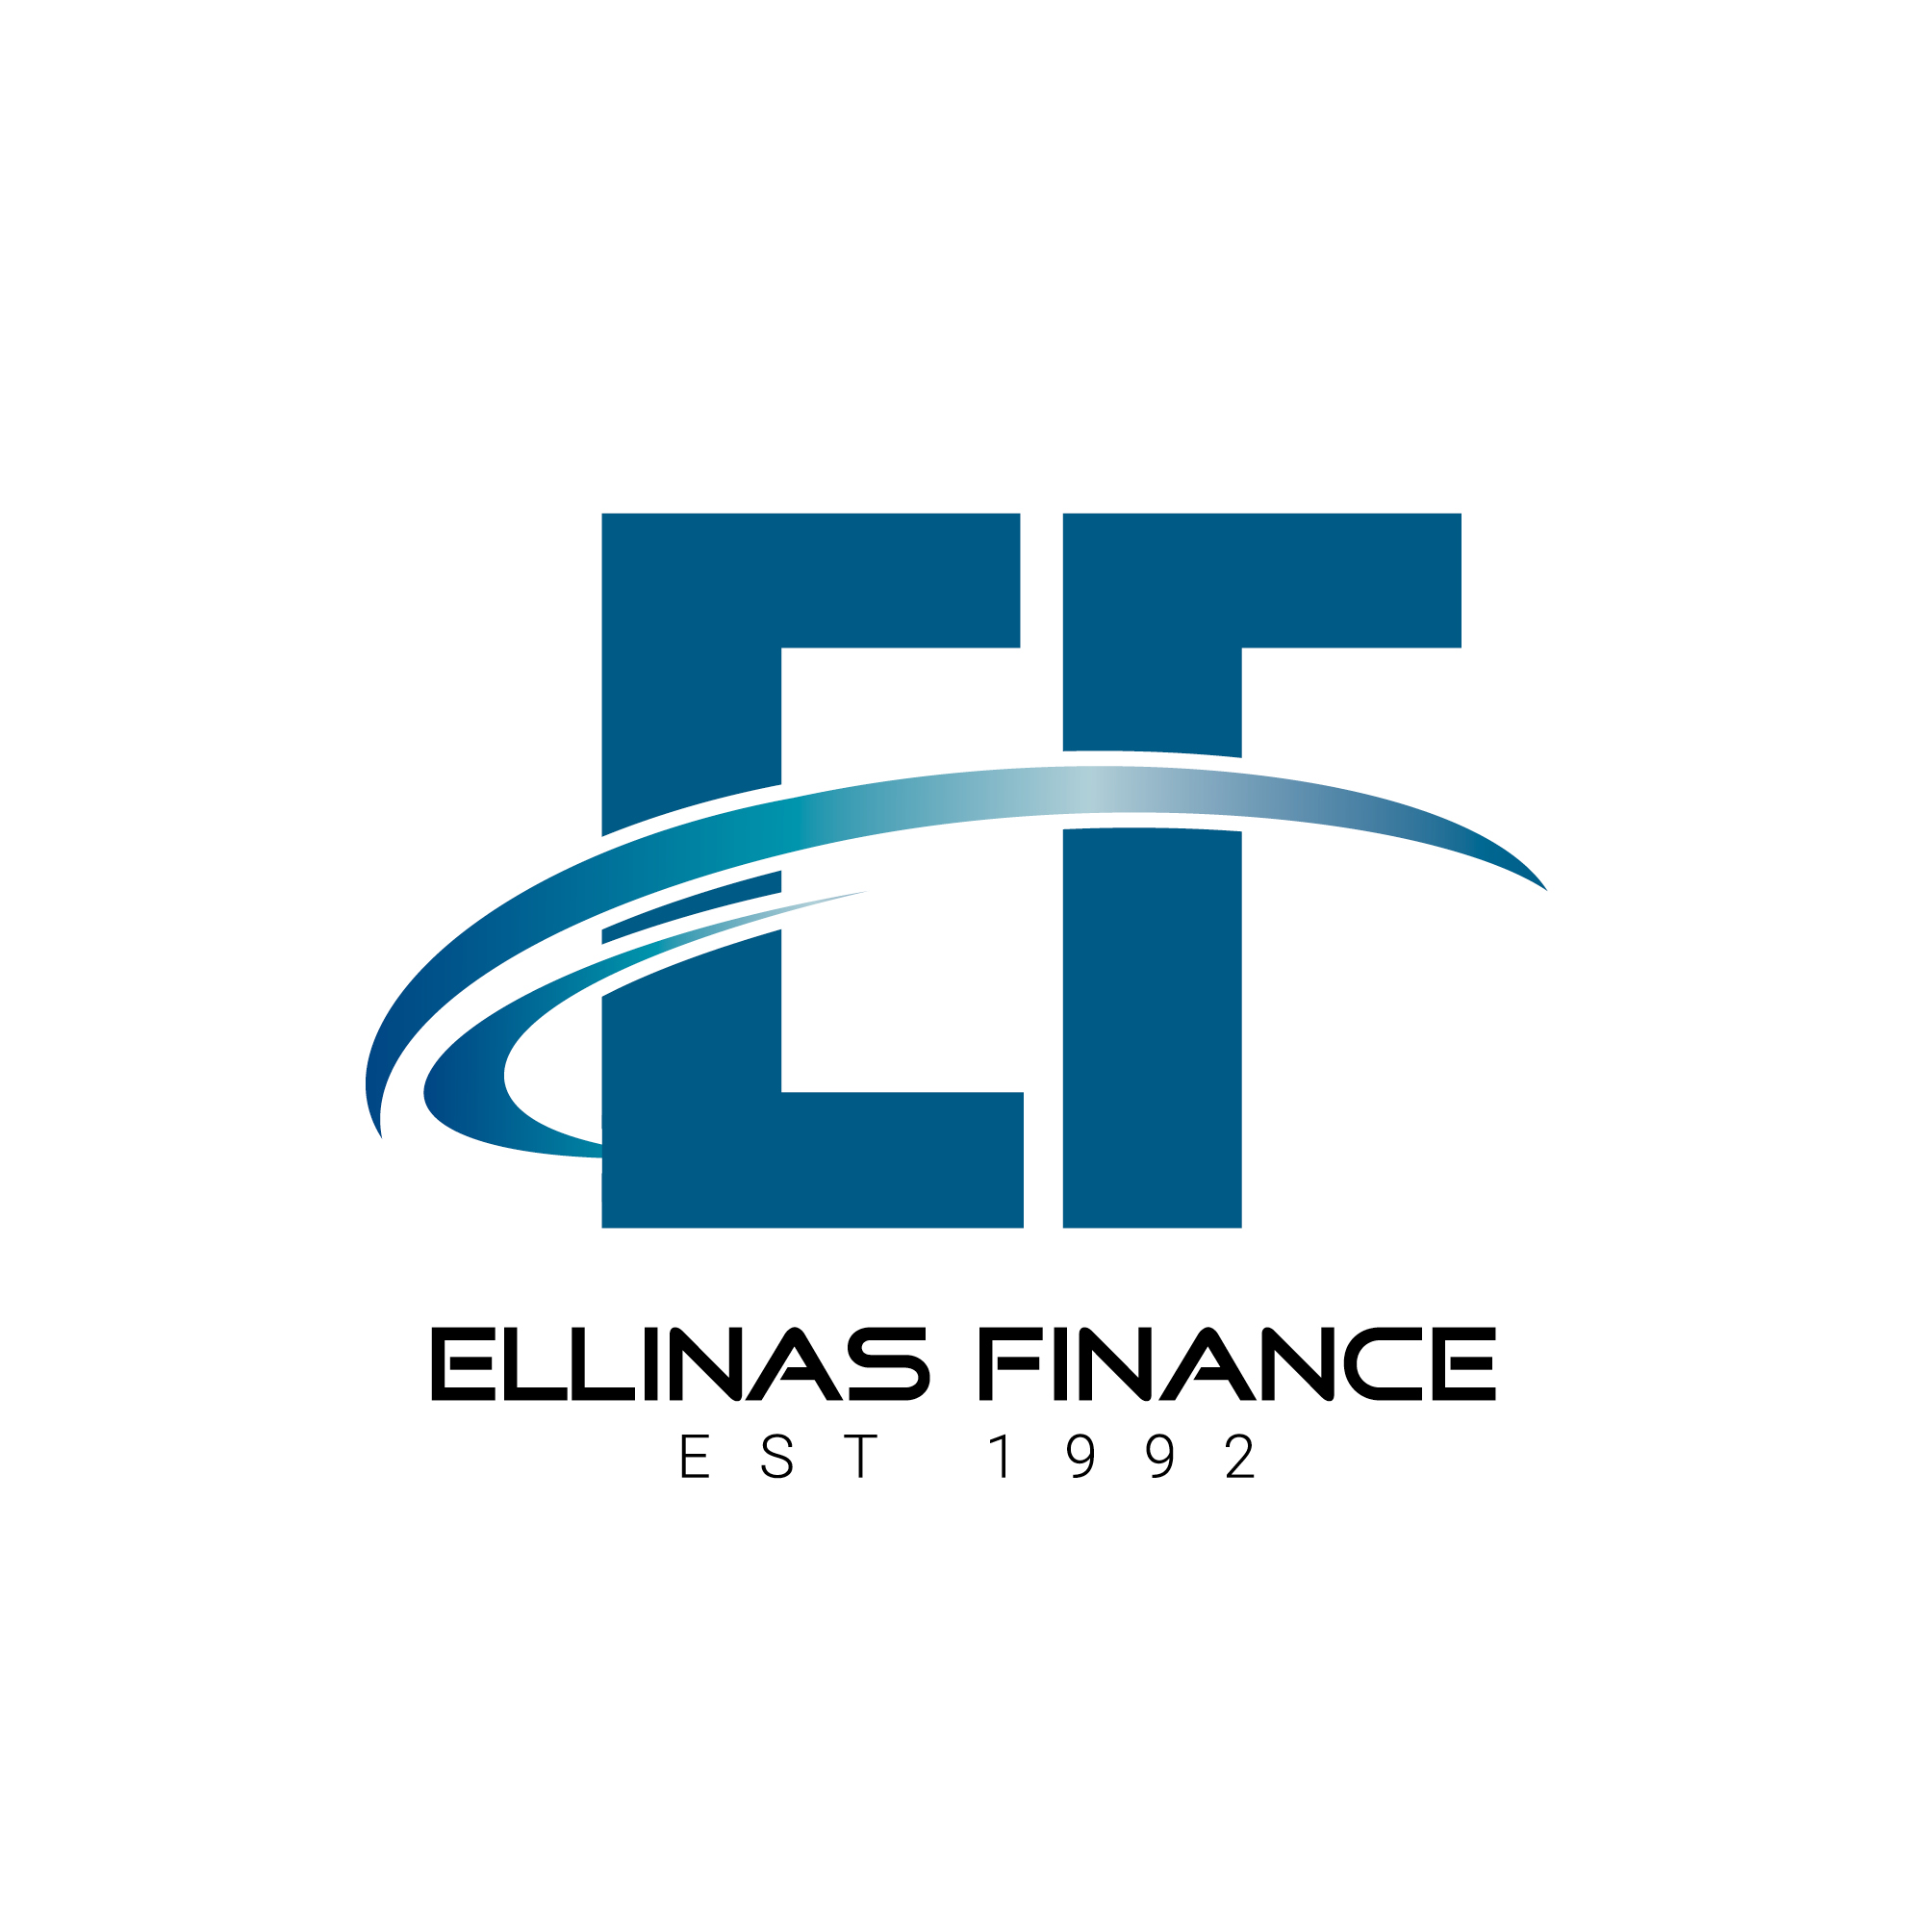 Ellinas Finance Public Company Ltd